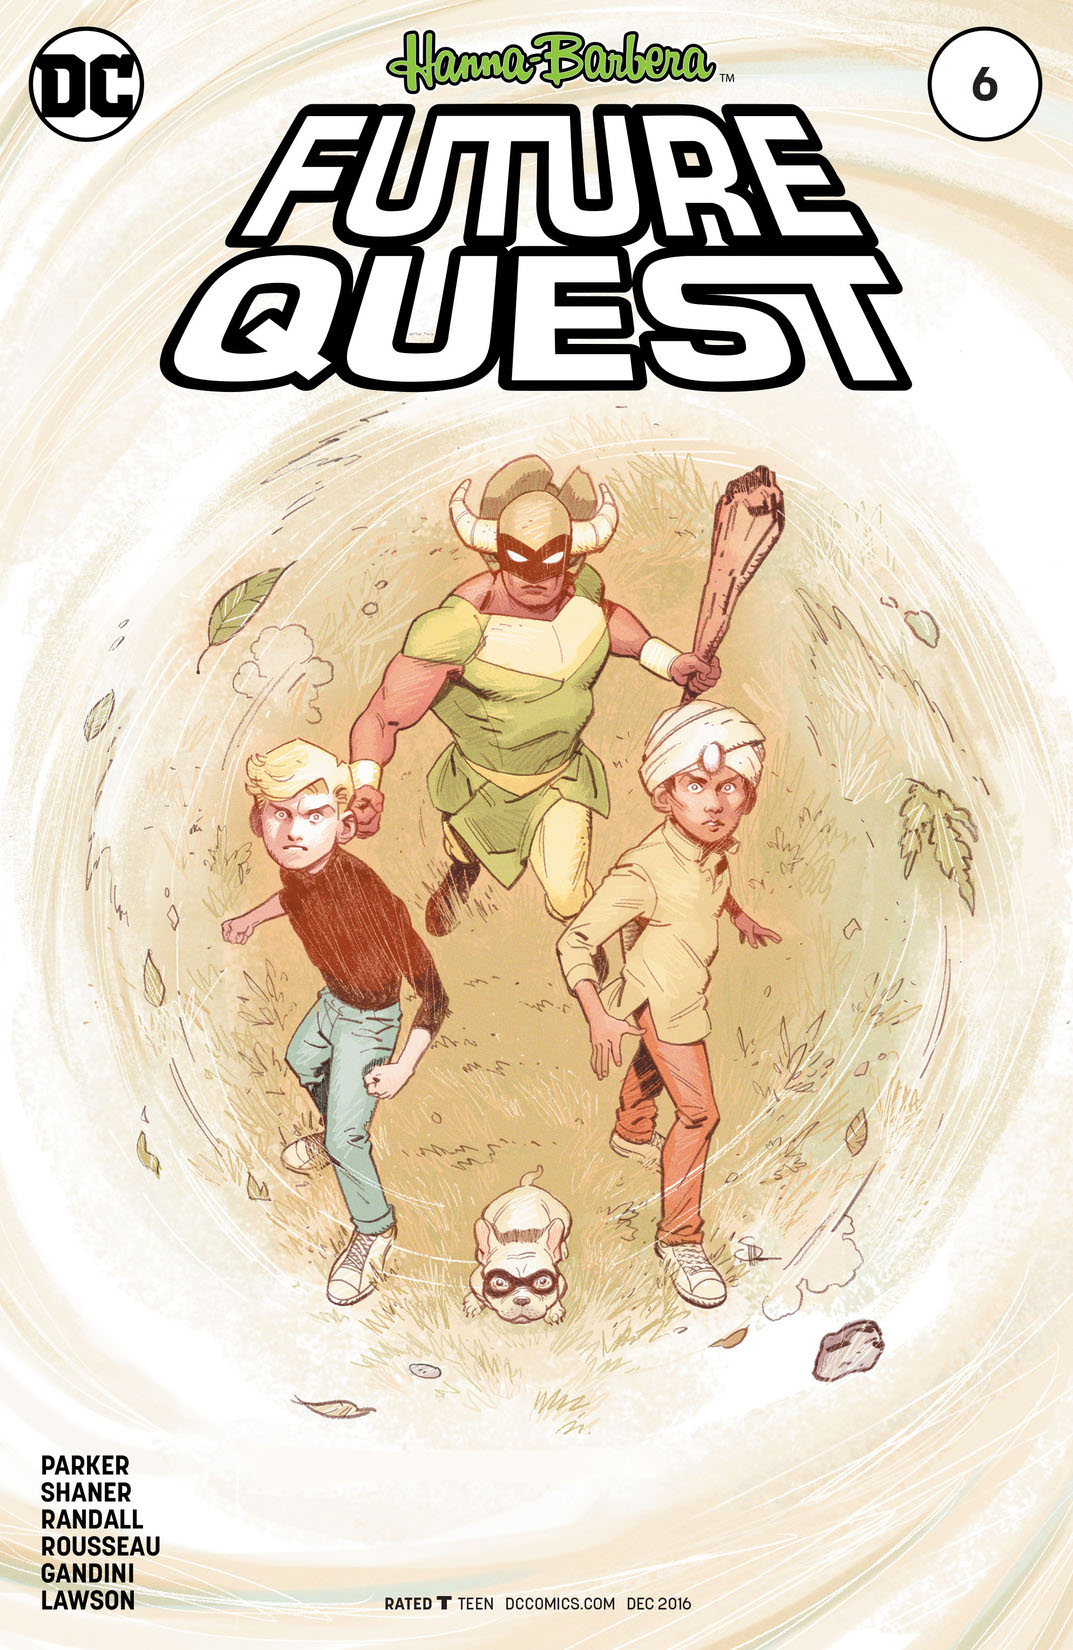 Future Quest #6 preview images